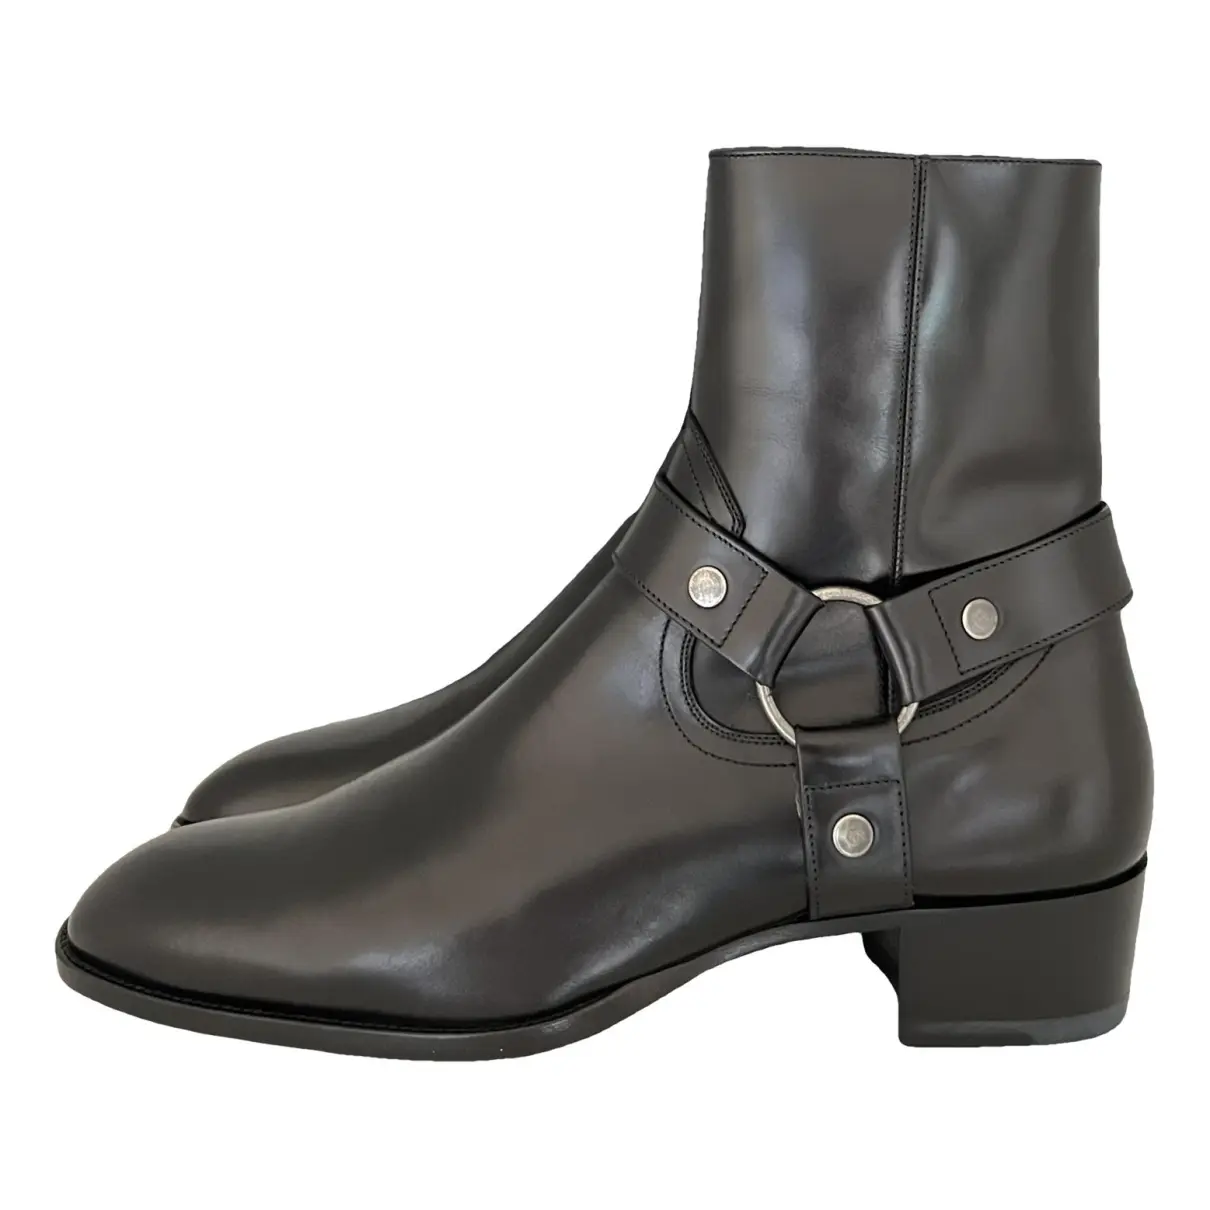 Wyatt leather boots